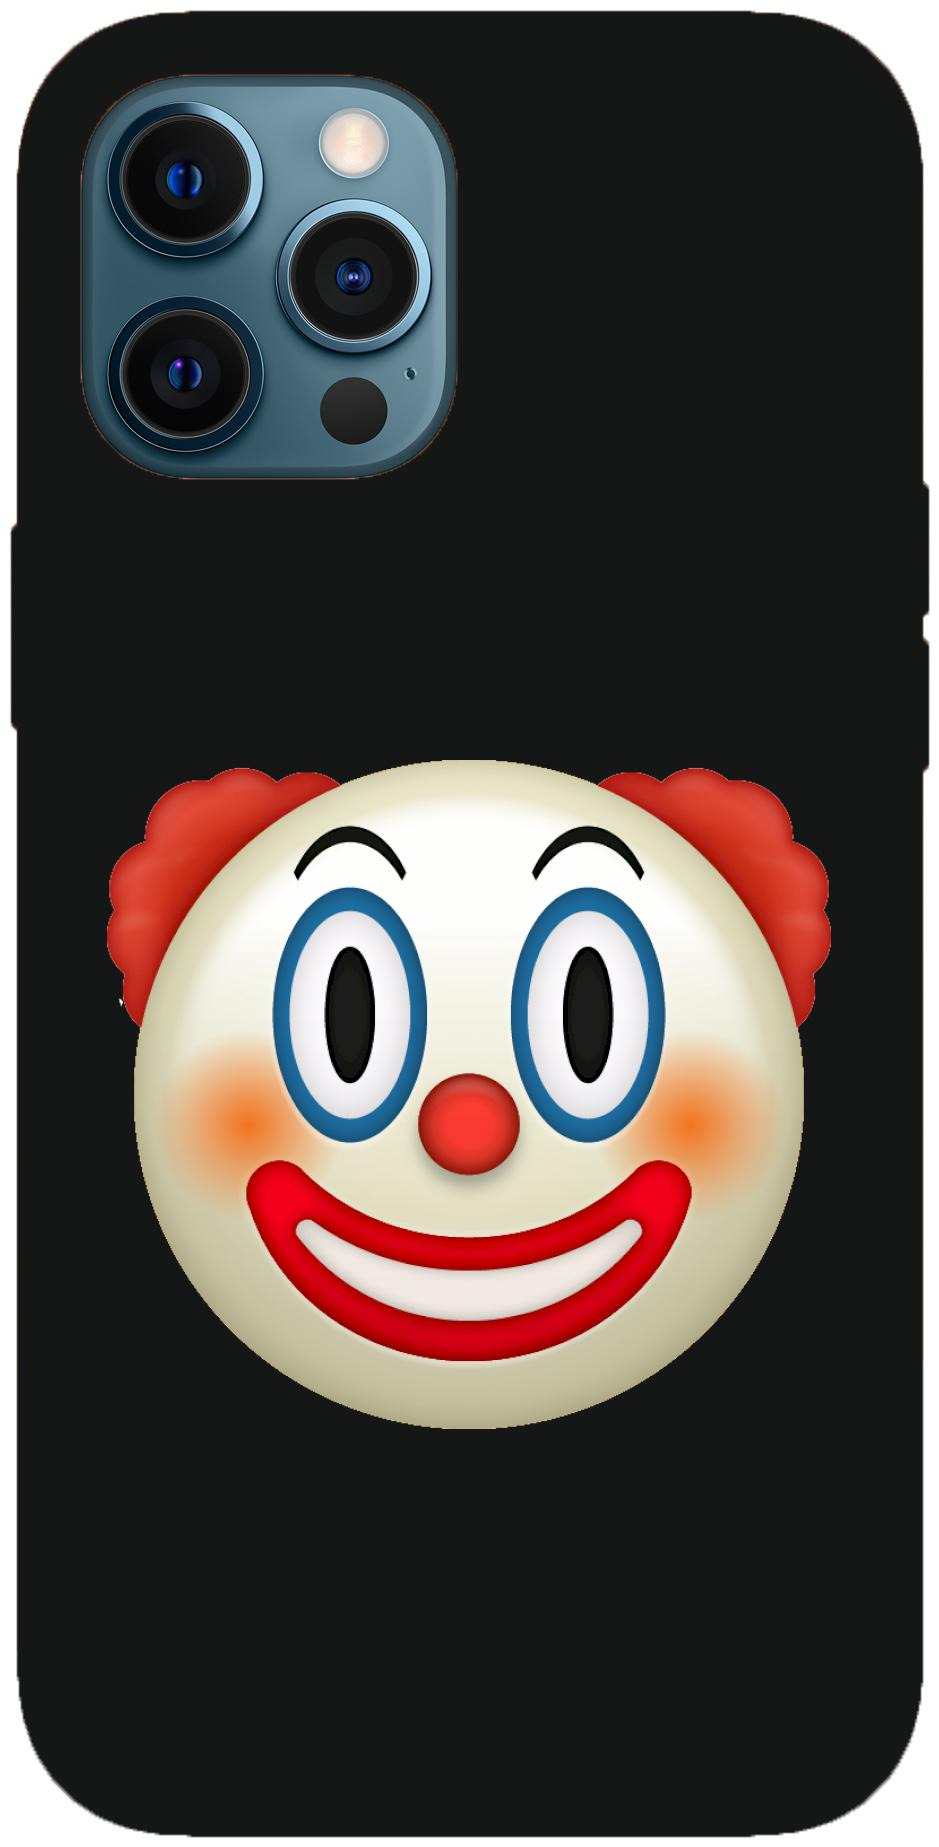 Клоун смайлик айфон. Смайлик клоуна. Смайлик клоуна айфон. Айфоновские смайлики клоун. Клоун шаблон.